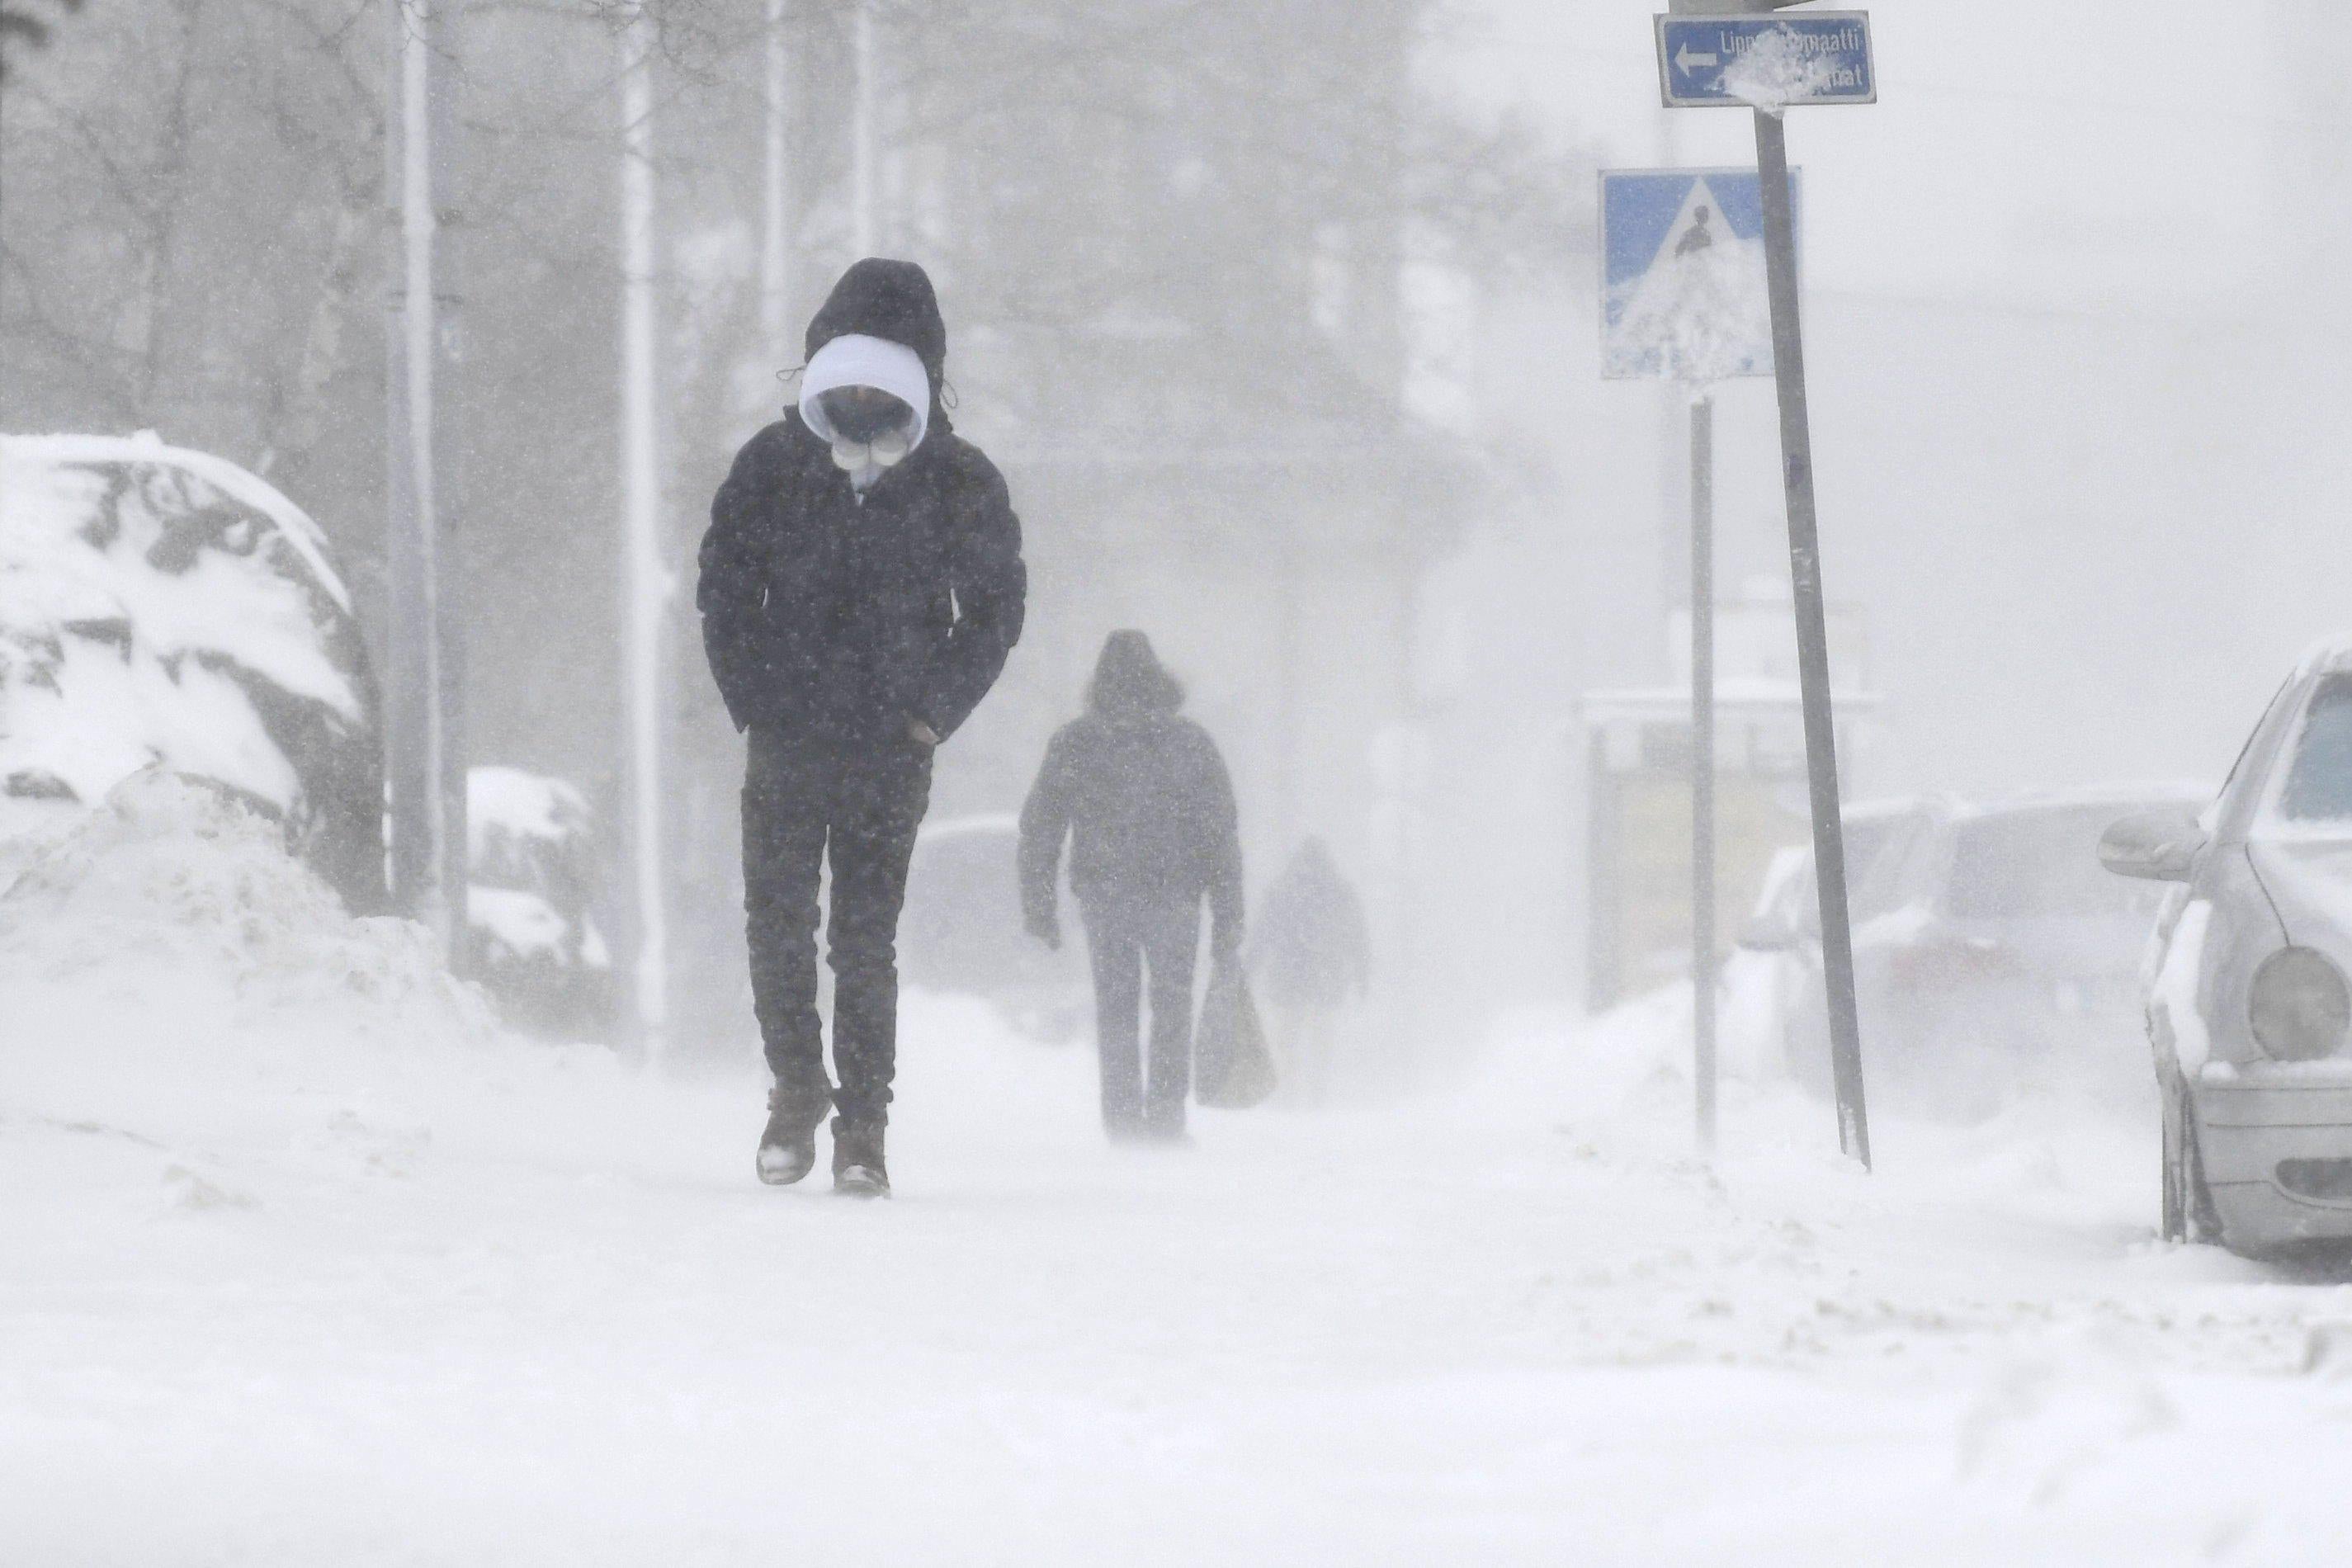 A man walking alone through a blizzard.